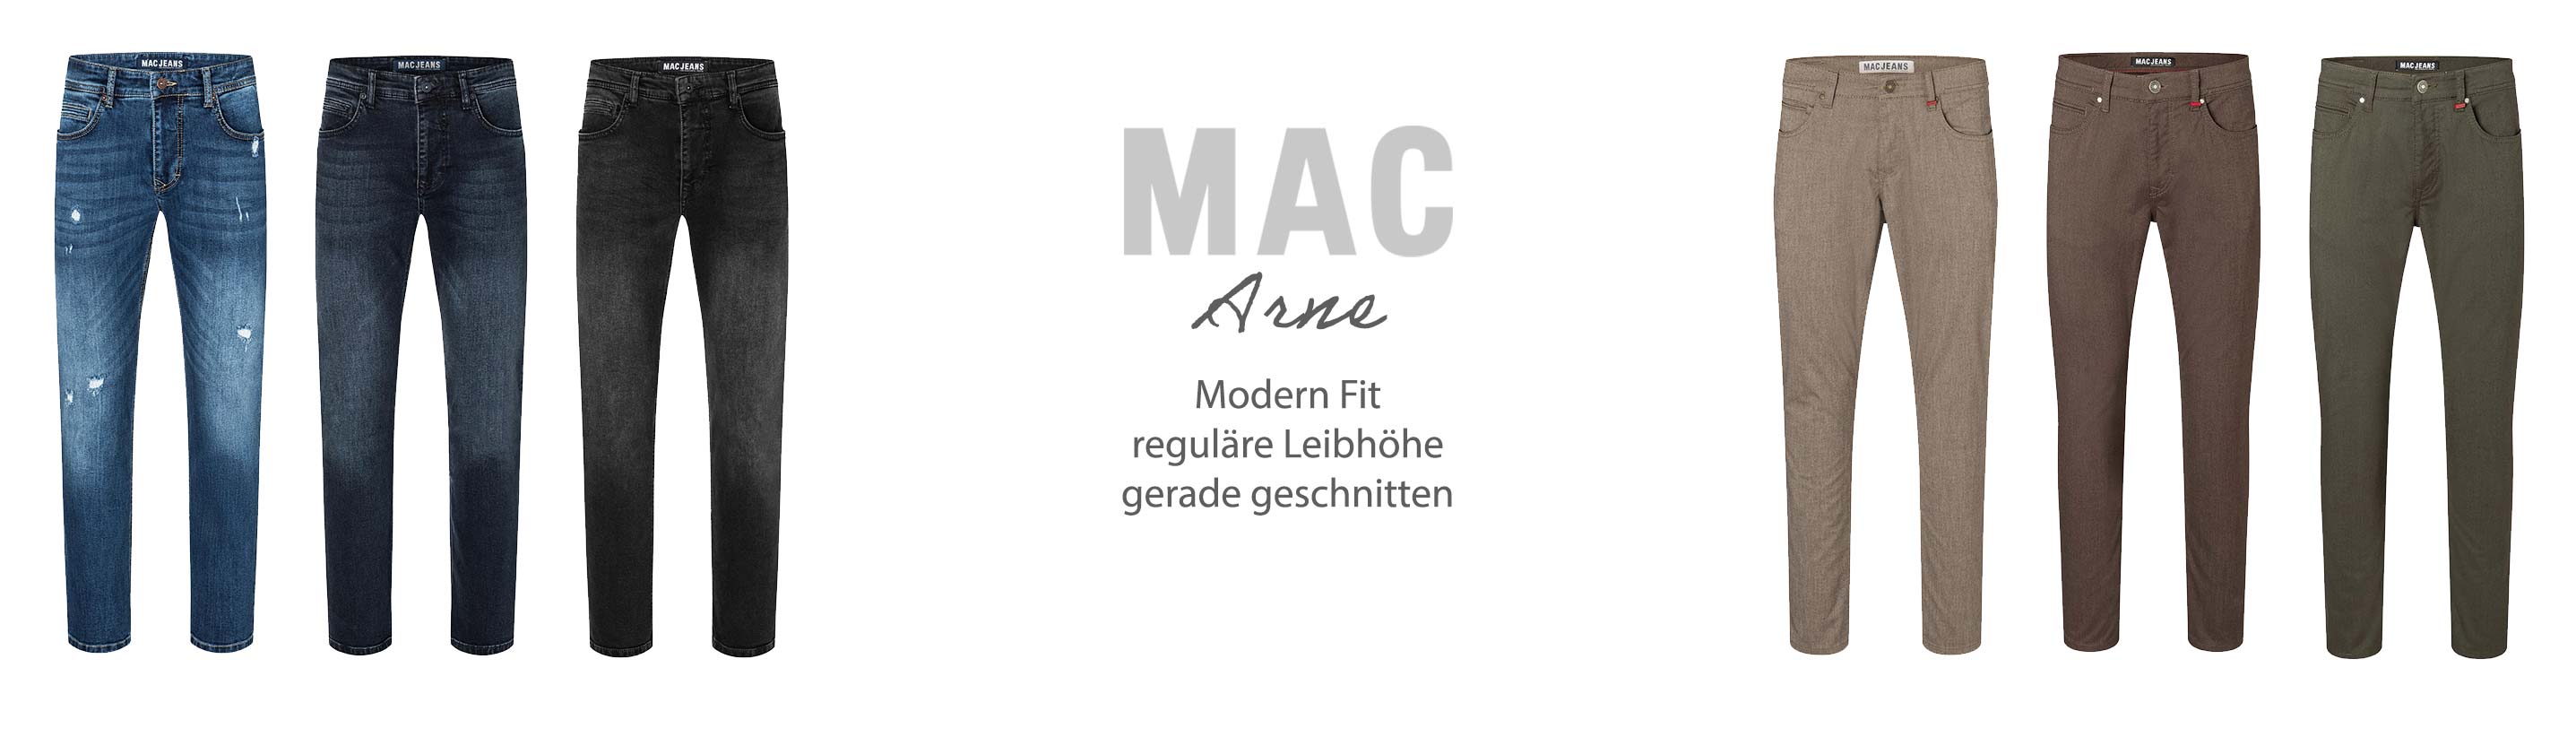 MAC Jeans Arne